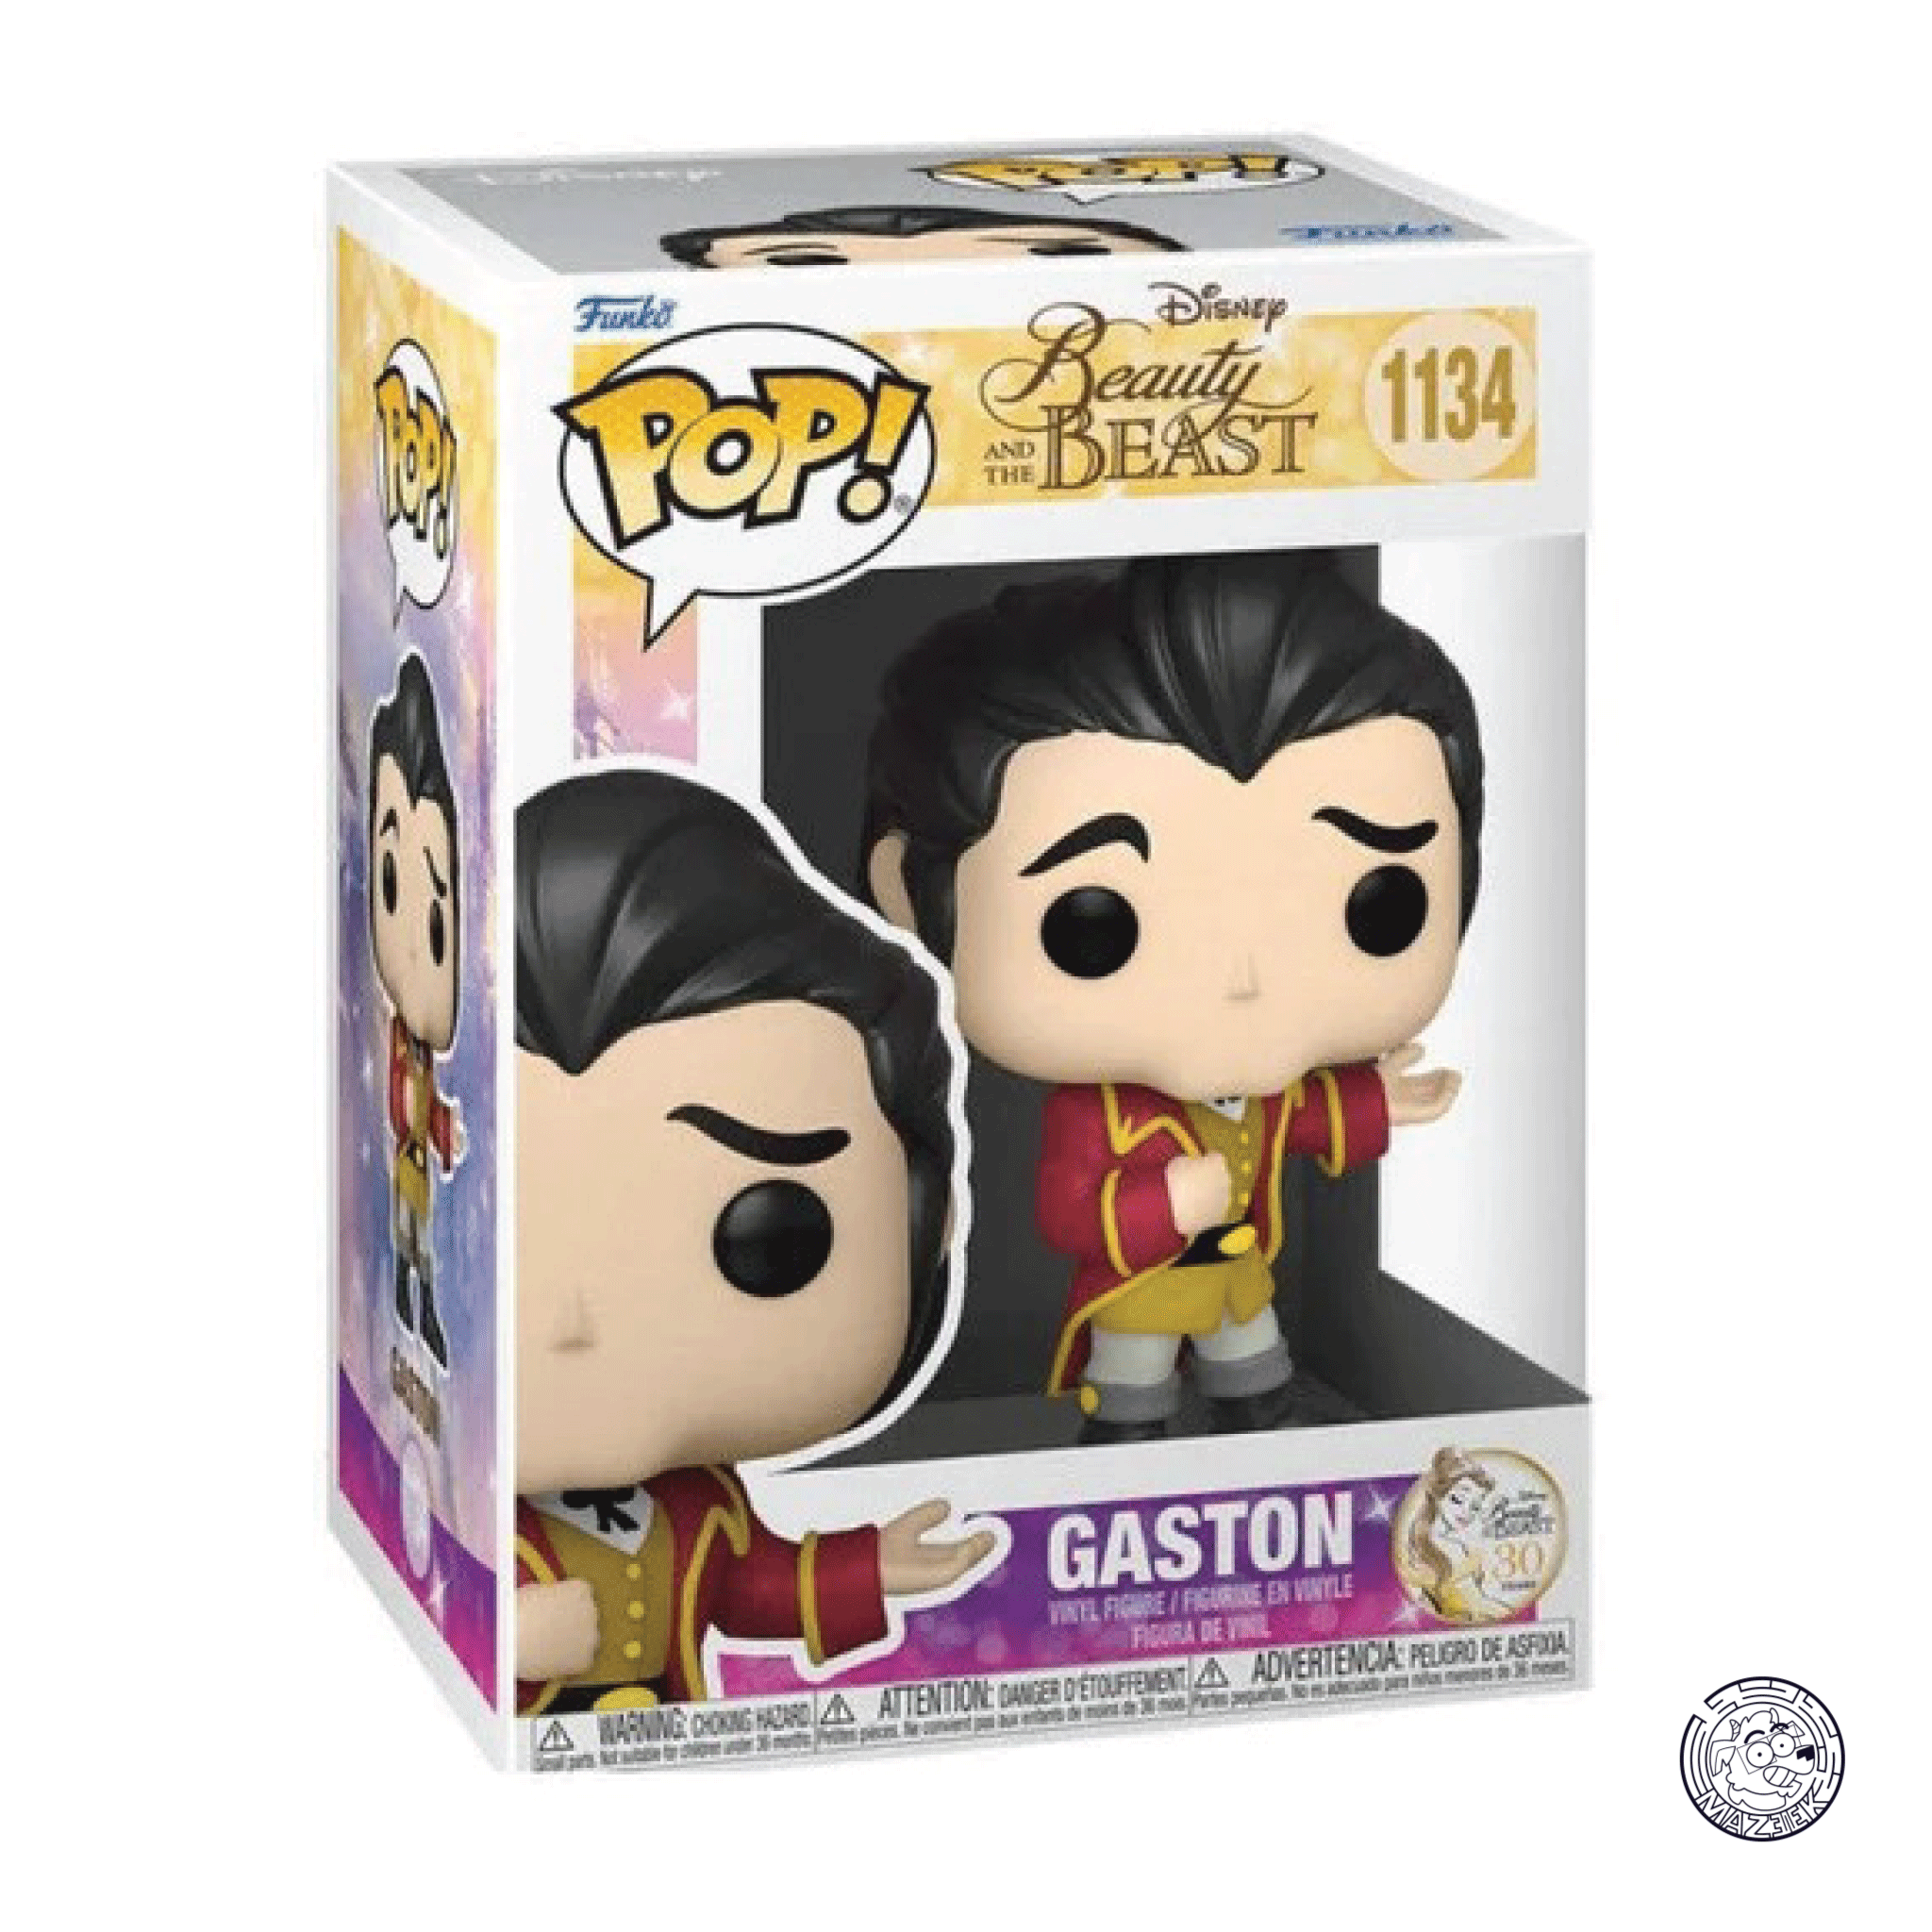 Funko POP! Beauty and the Beast: Gaston 1134